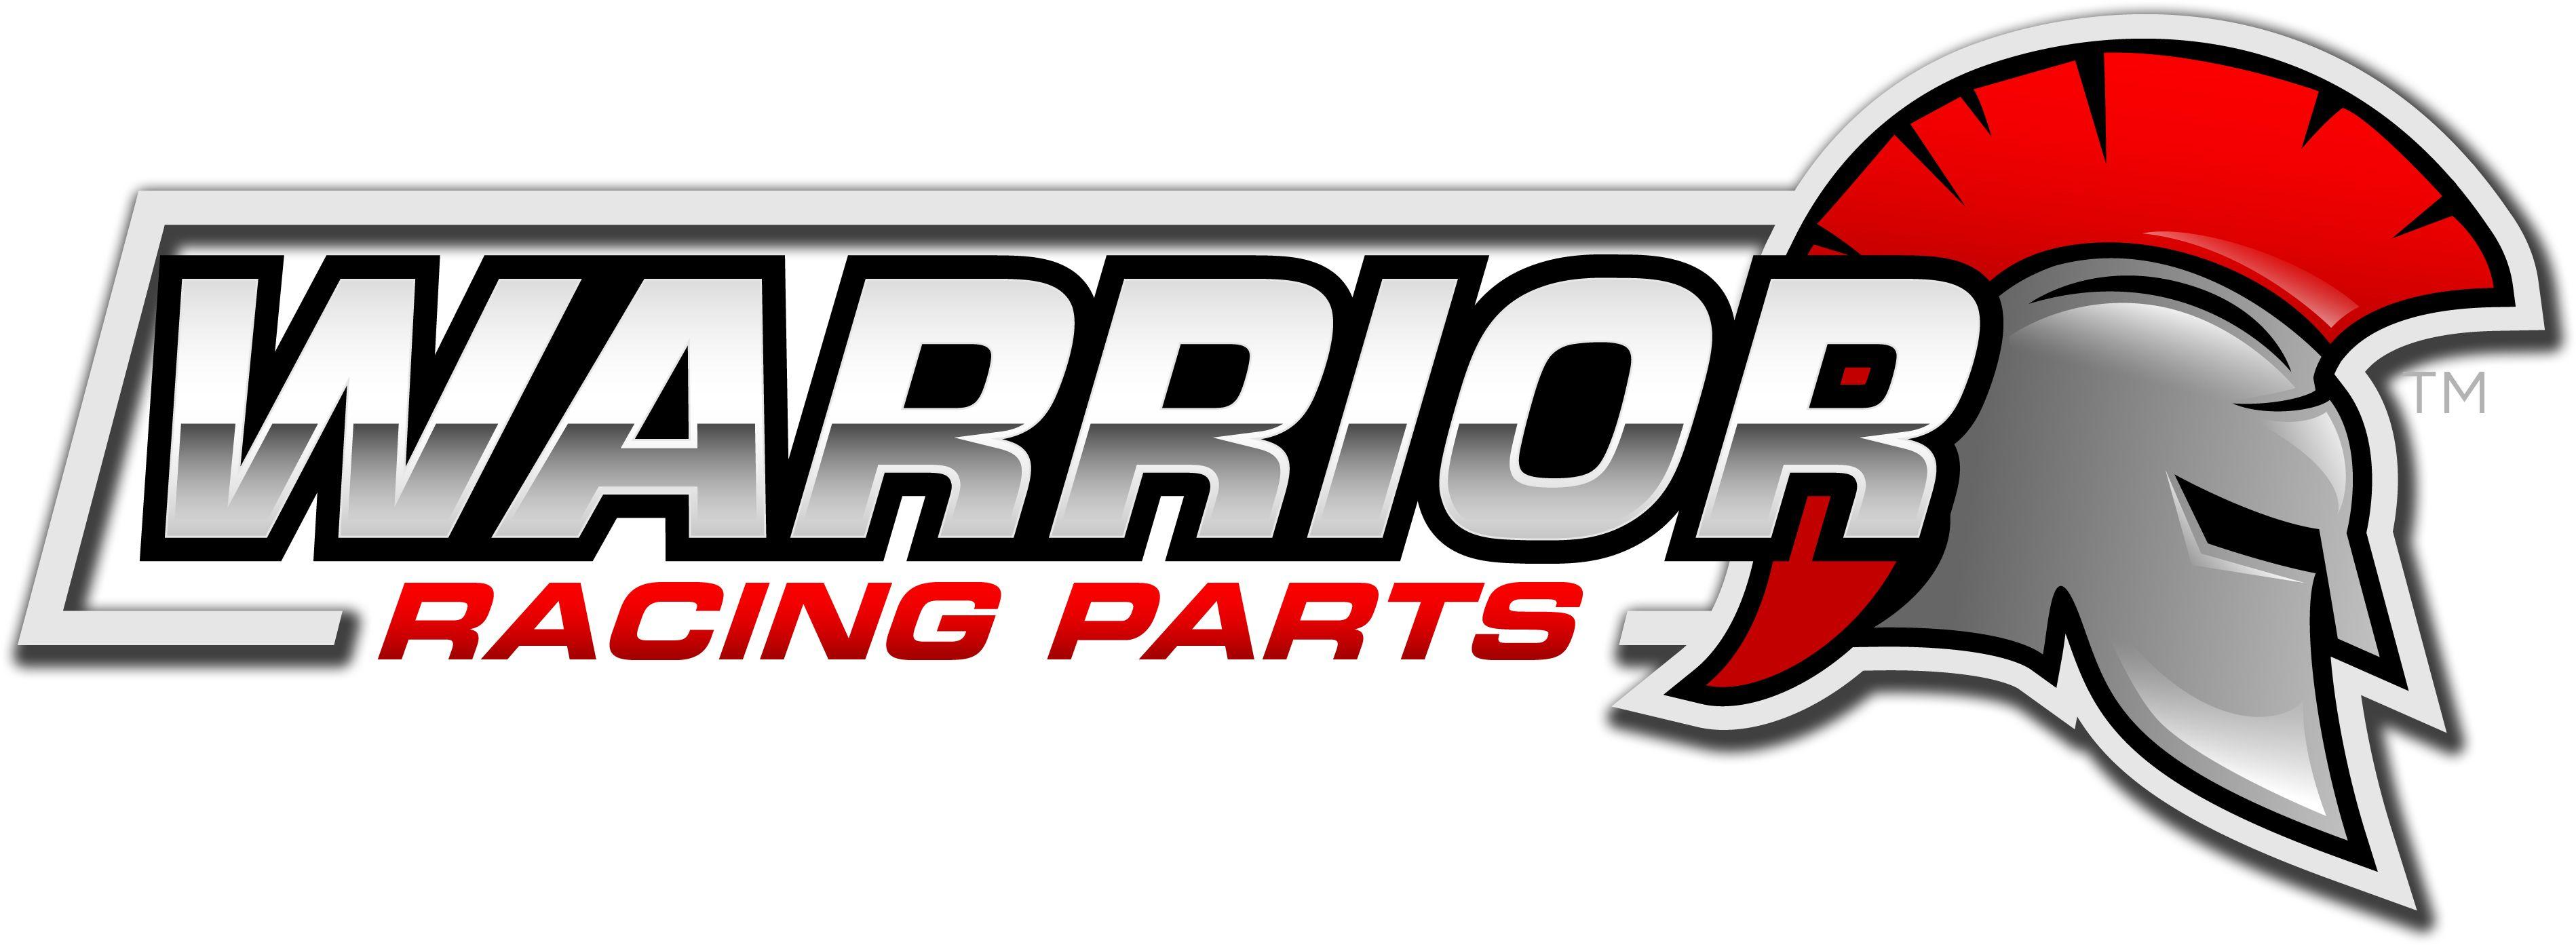 Racing Parts Logo - Warrior Racing Parts motorcycle racing parts